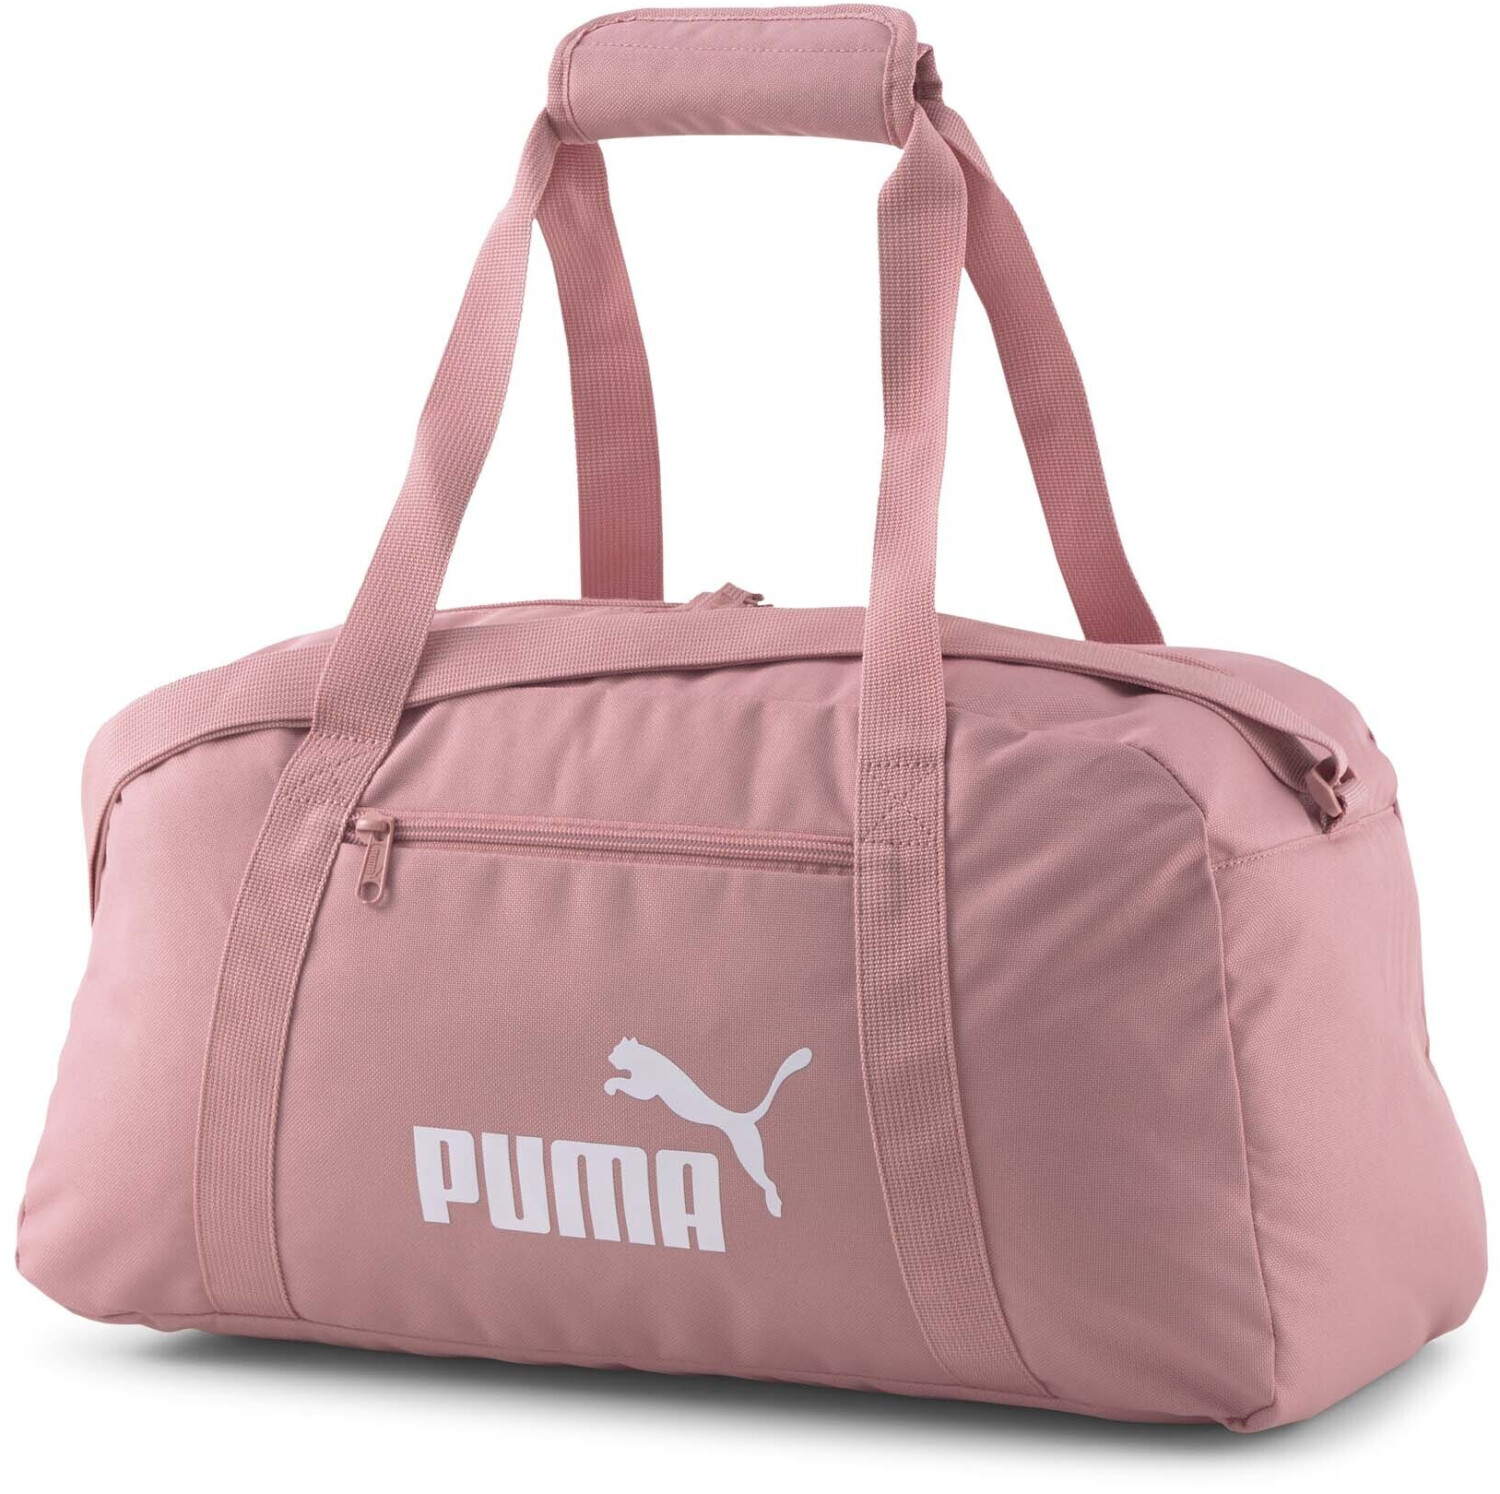 bei Phase 21,76 ab Preisvergleich | Puma € Sports Bag